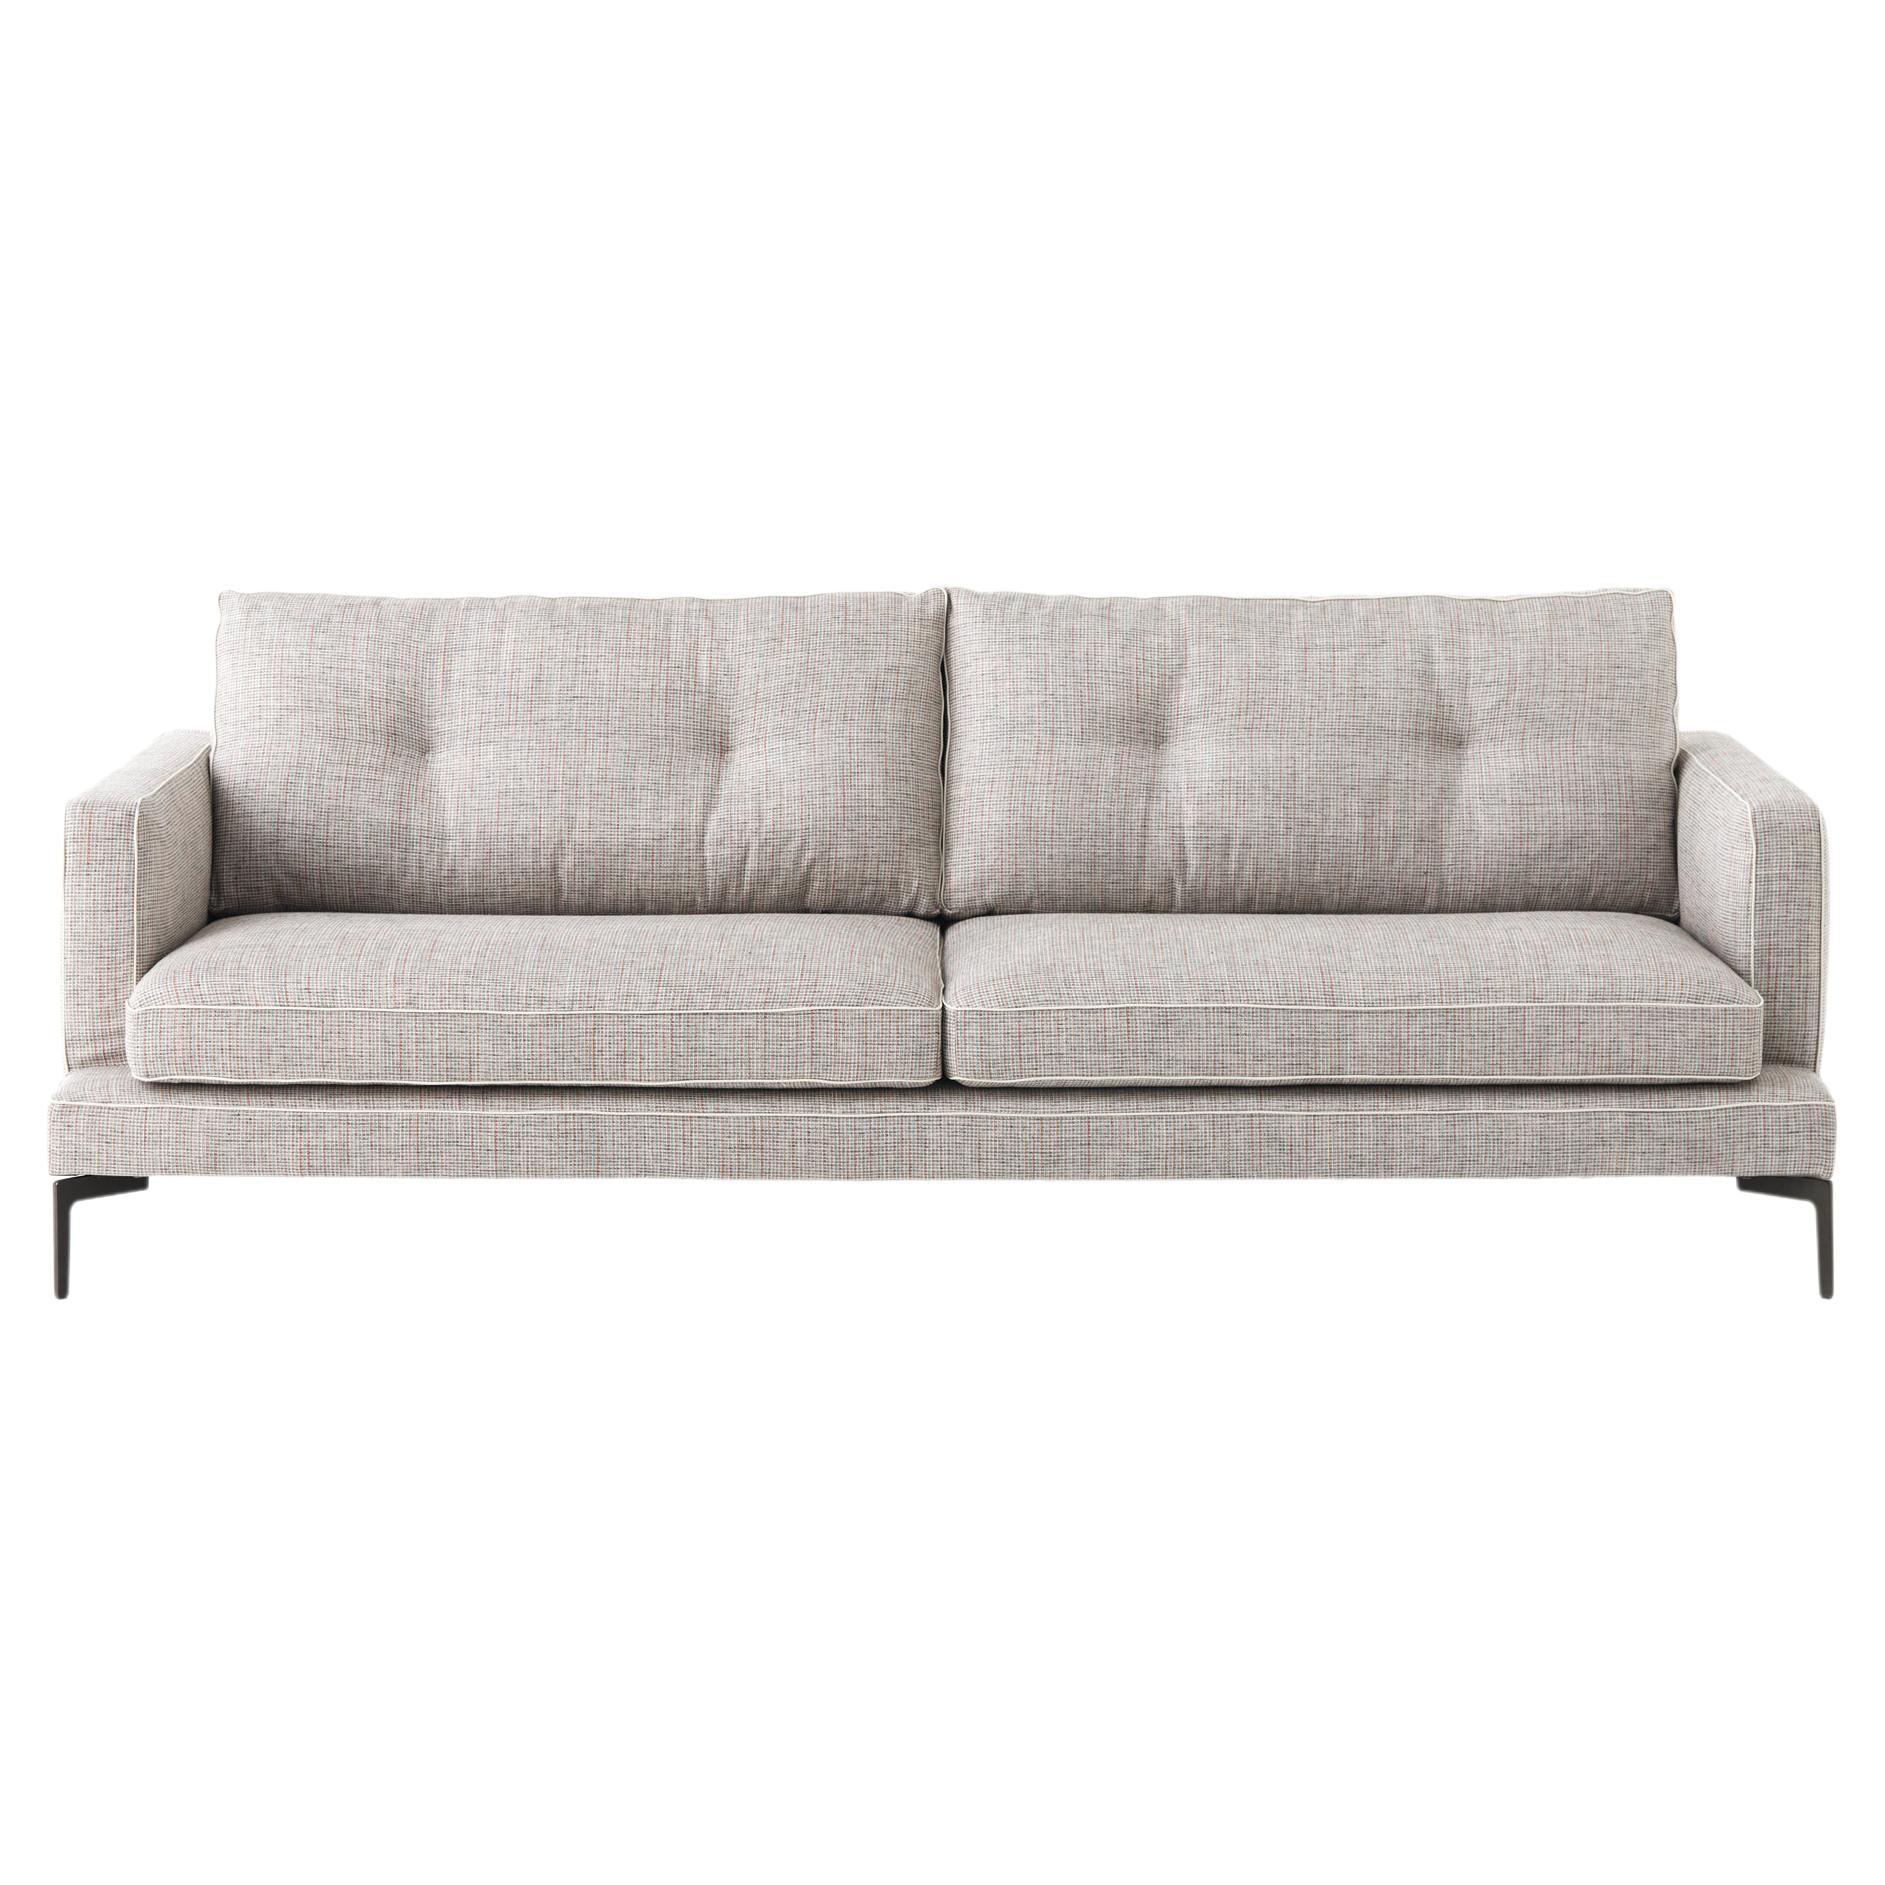 Essentiel 2-Seat 154 Sofa in Vip Beige Upholstery & Grey Legs by Sergio Bicego